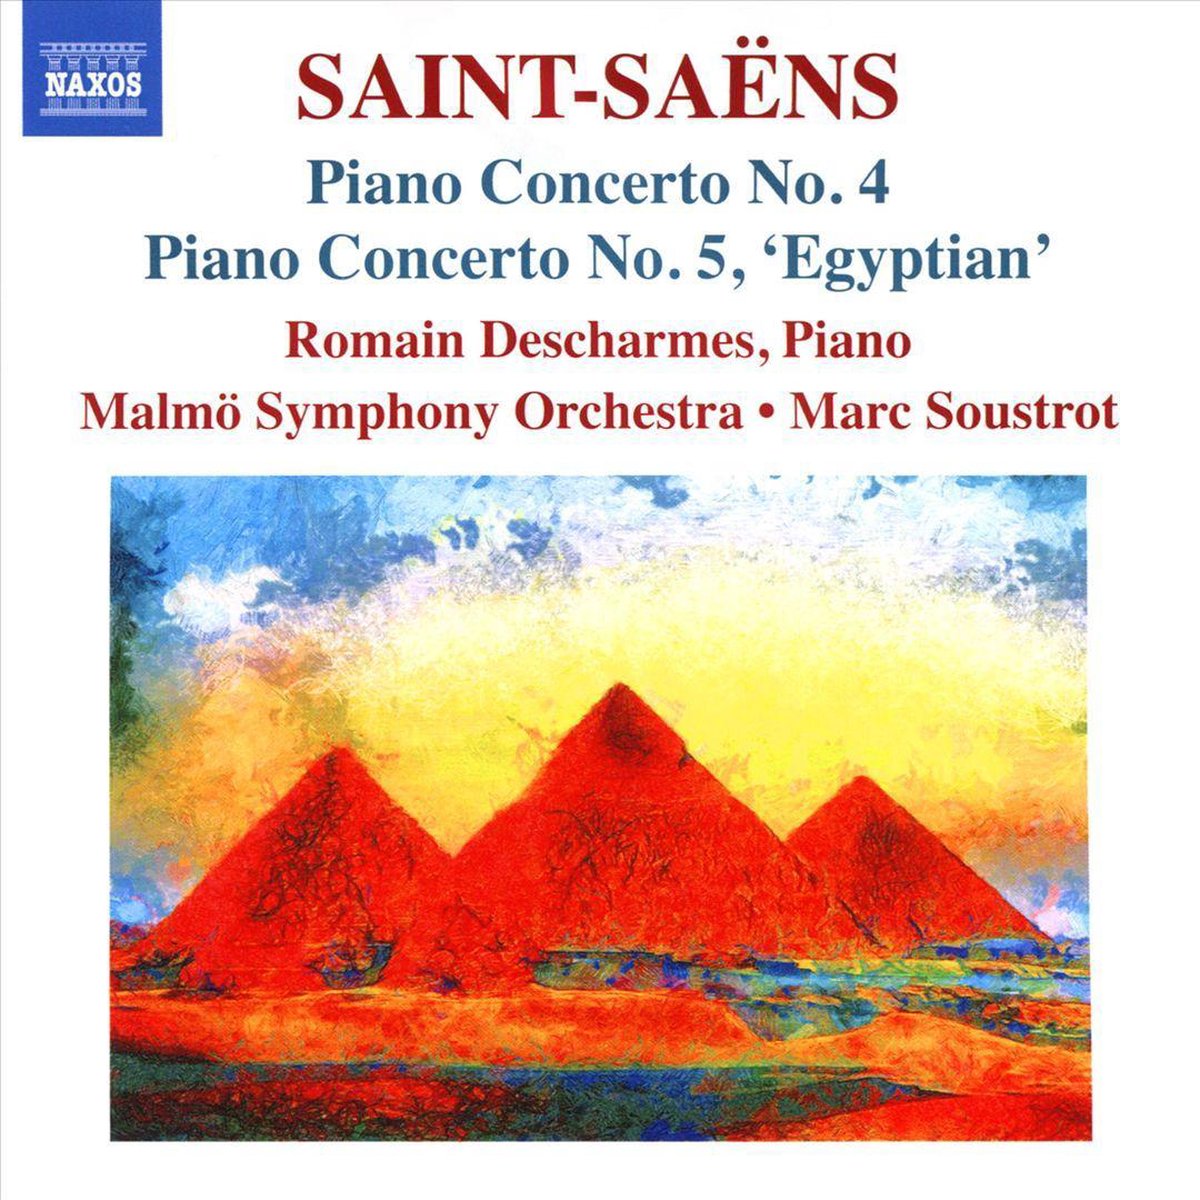 Saint-Saens: Piano Concertos Nos. 4 and 5 ”Egyptian” | Camille Saint-Saens